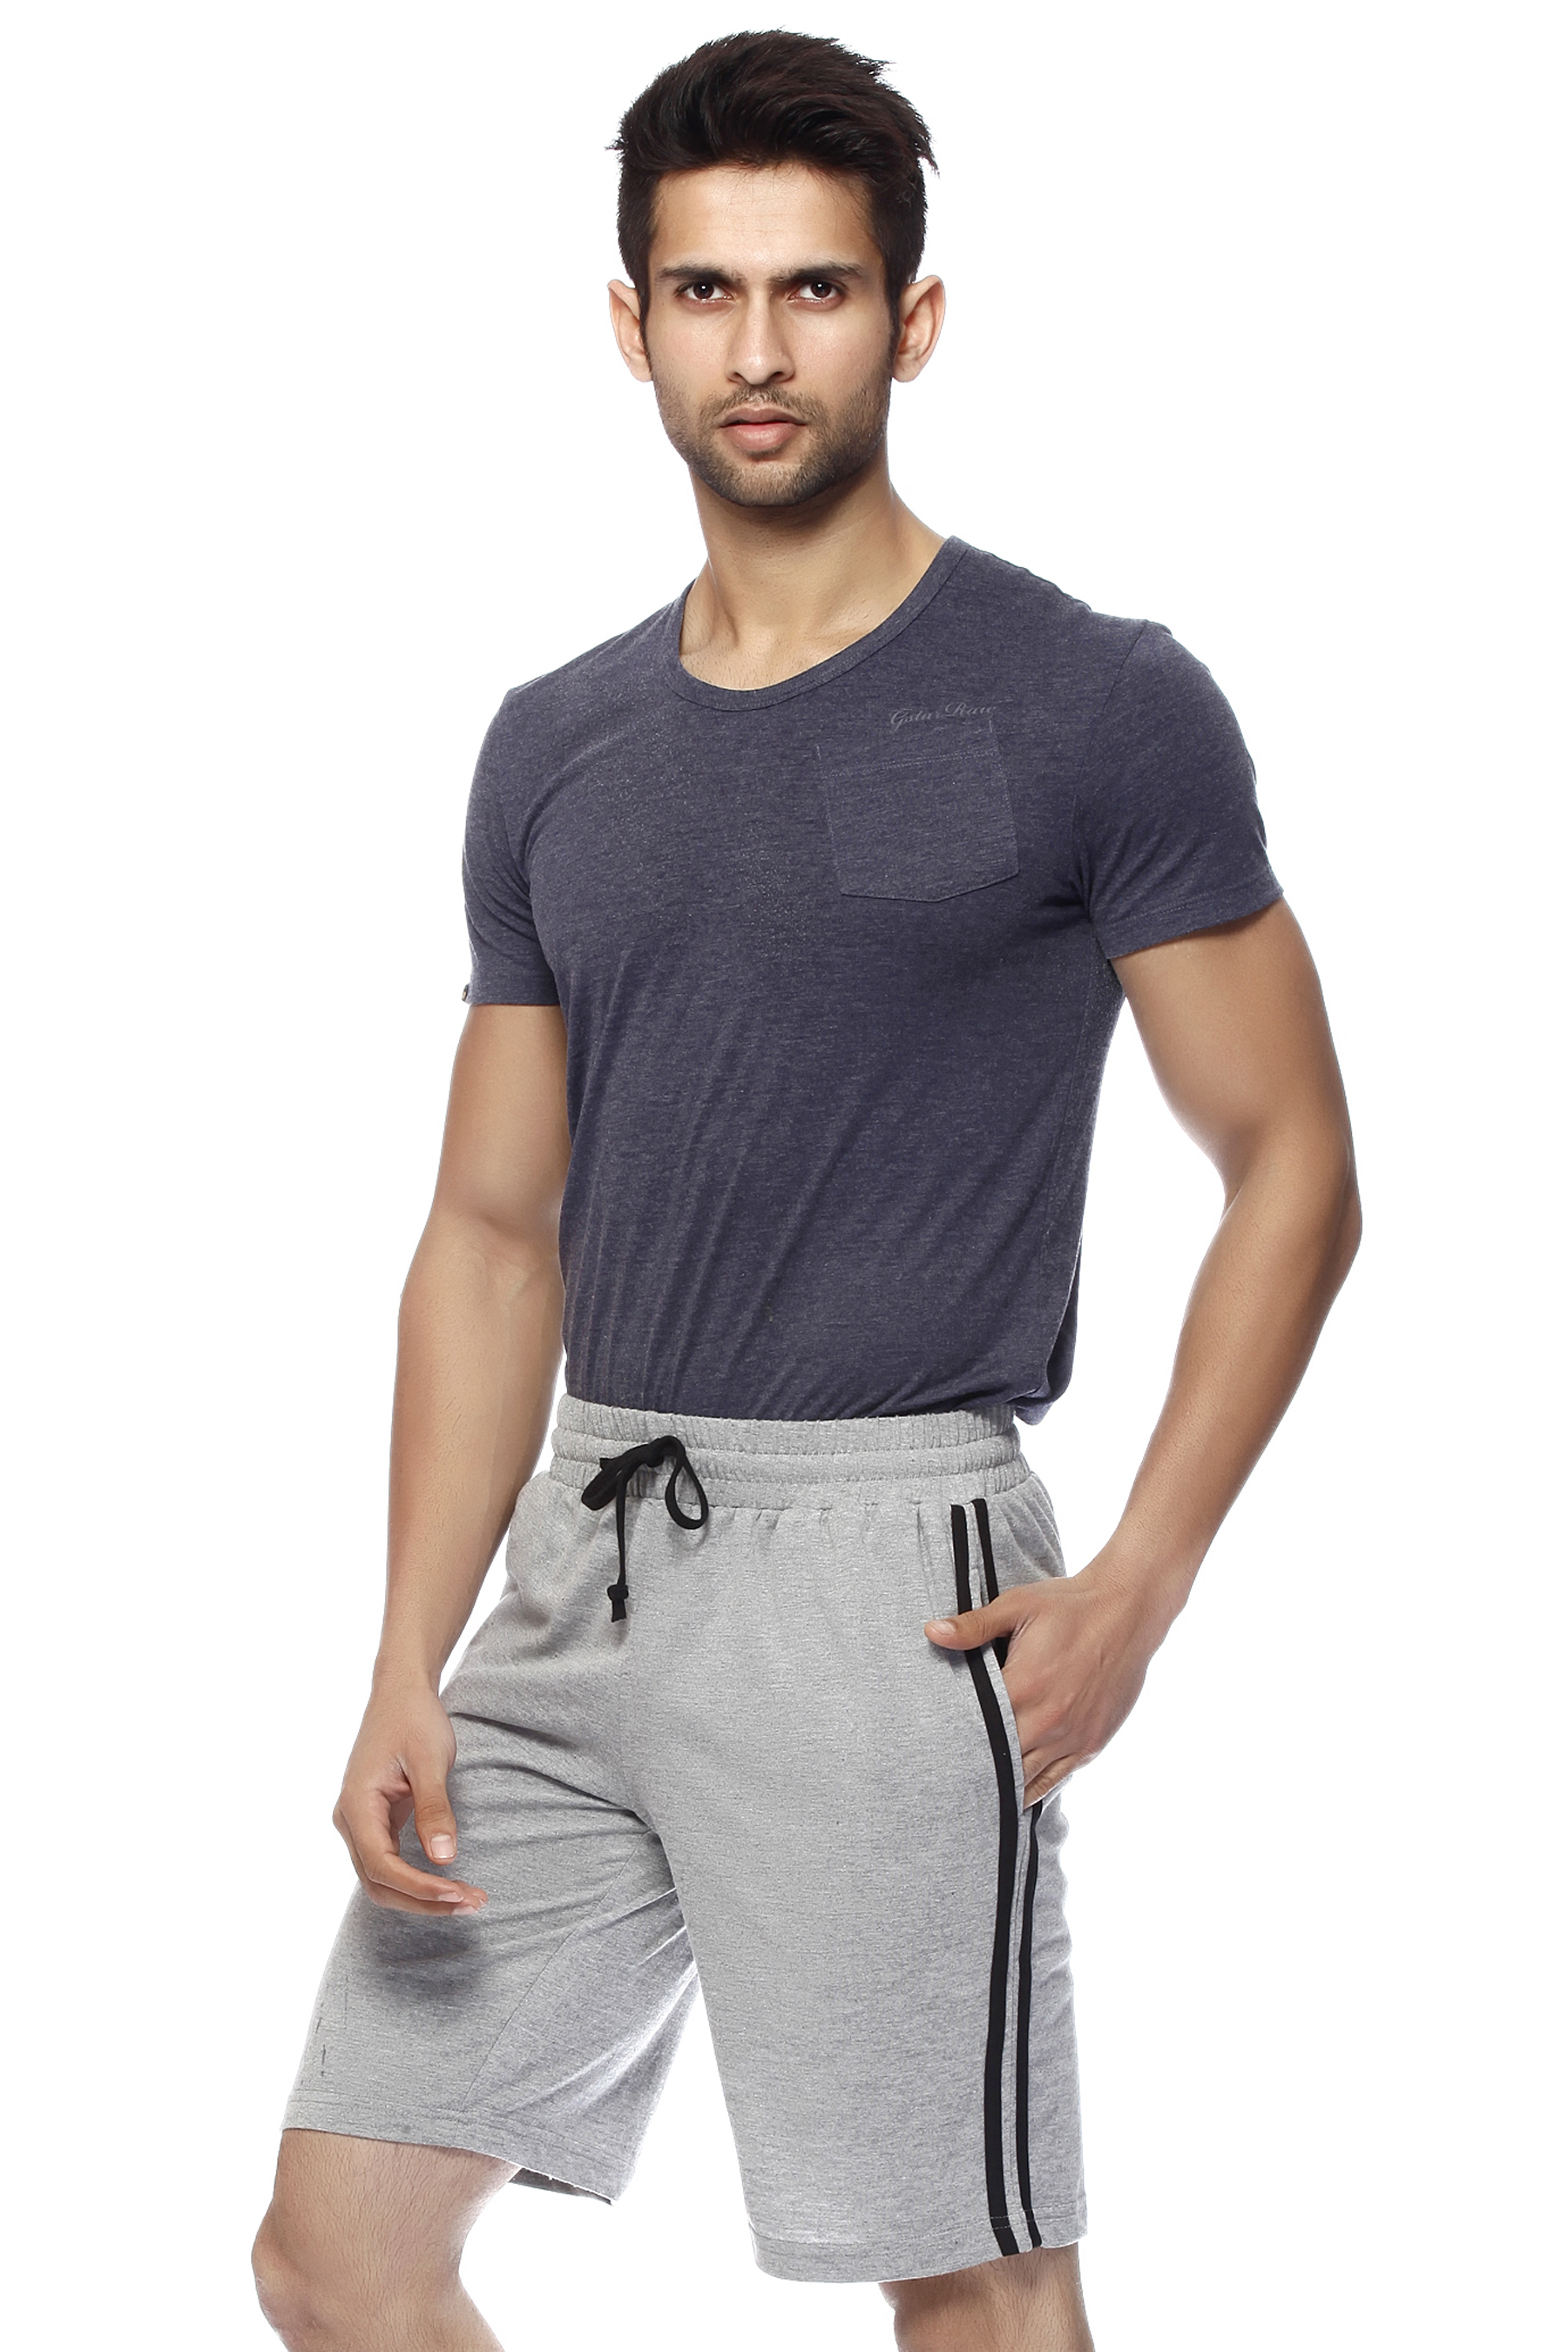 Gritstones Grey/Black Shorts Men's T-Shirt